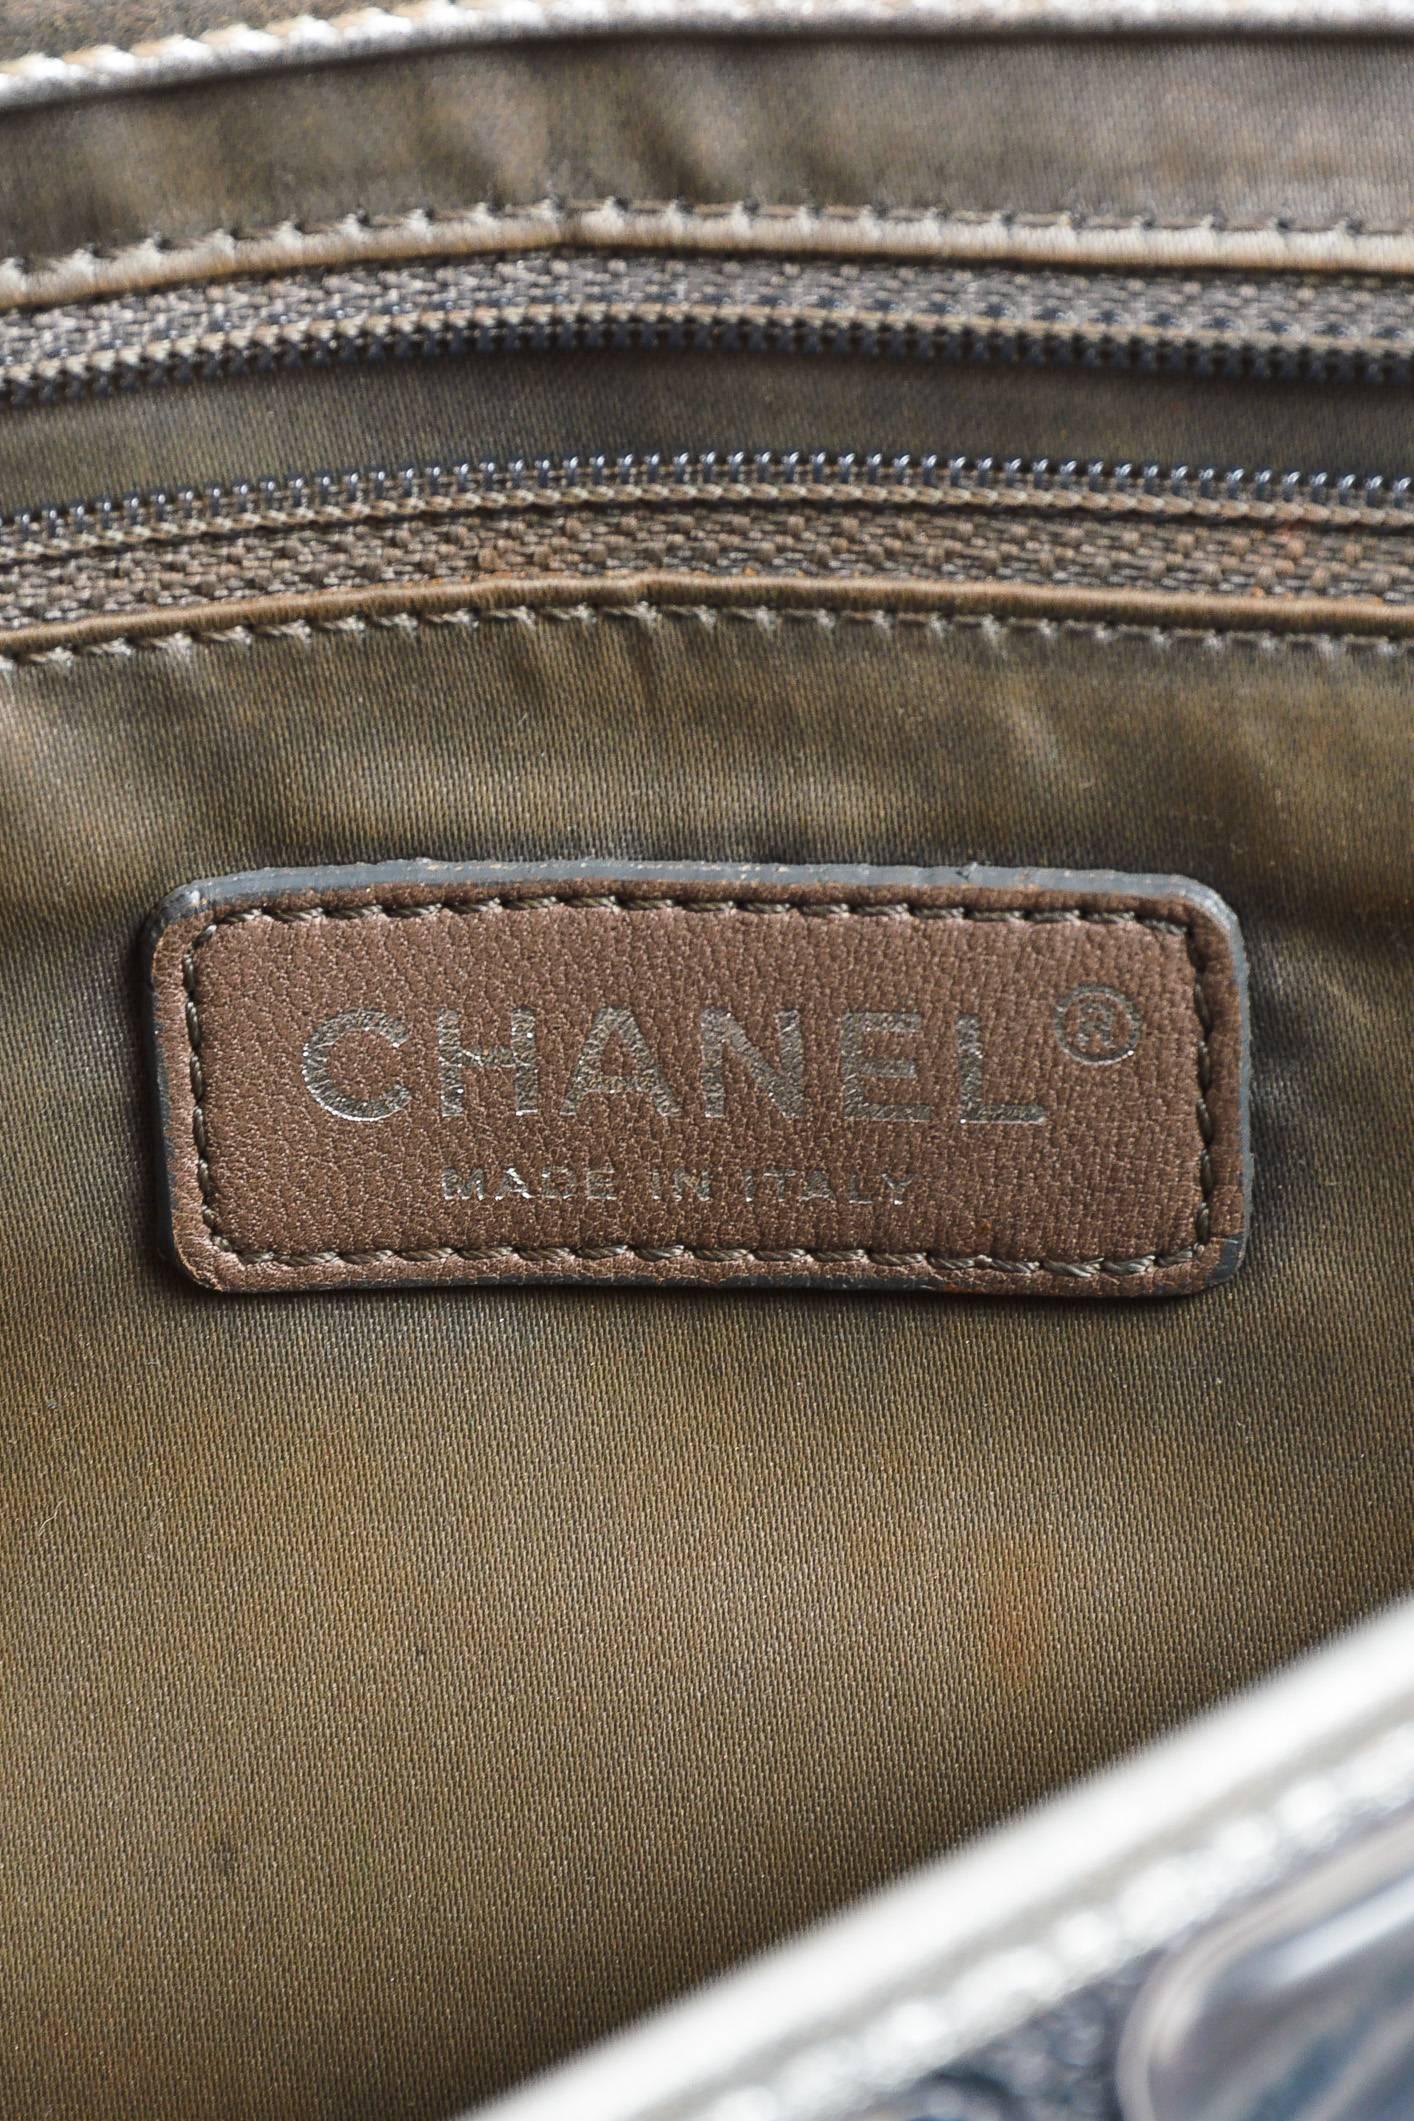 Chanel Silver Metallic Leather Coated 